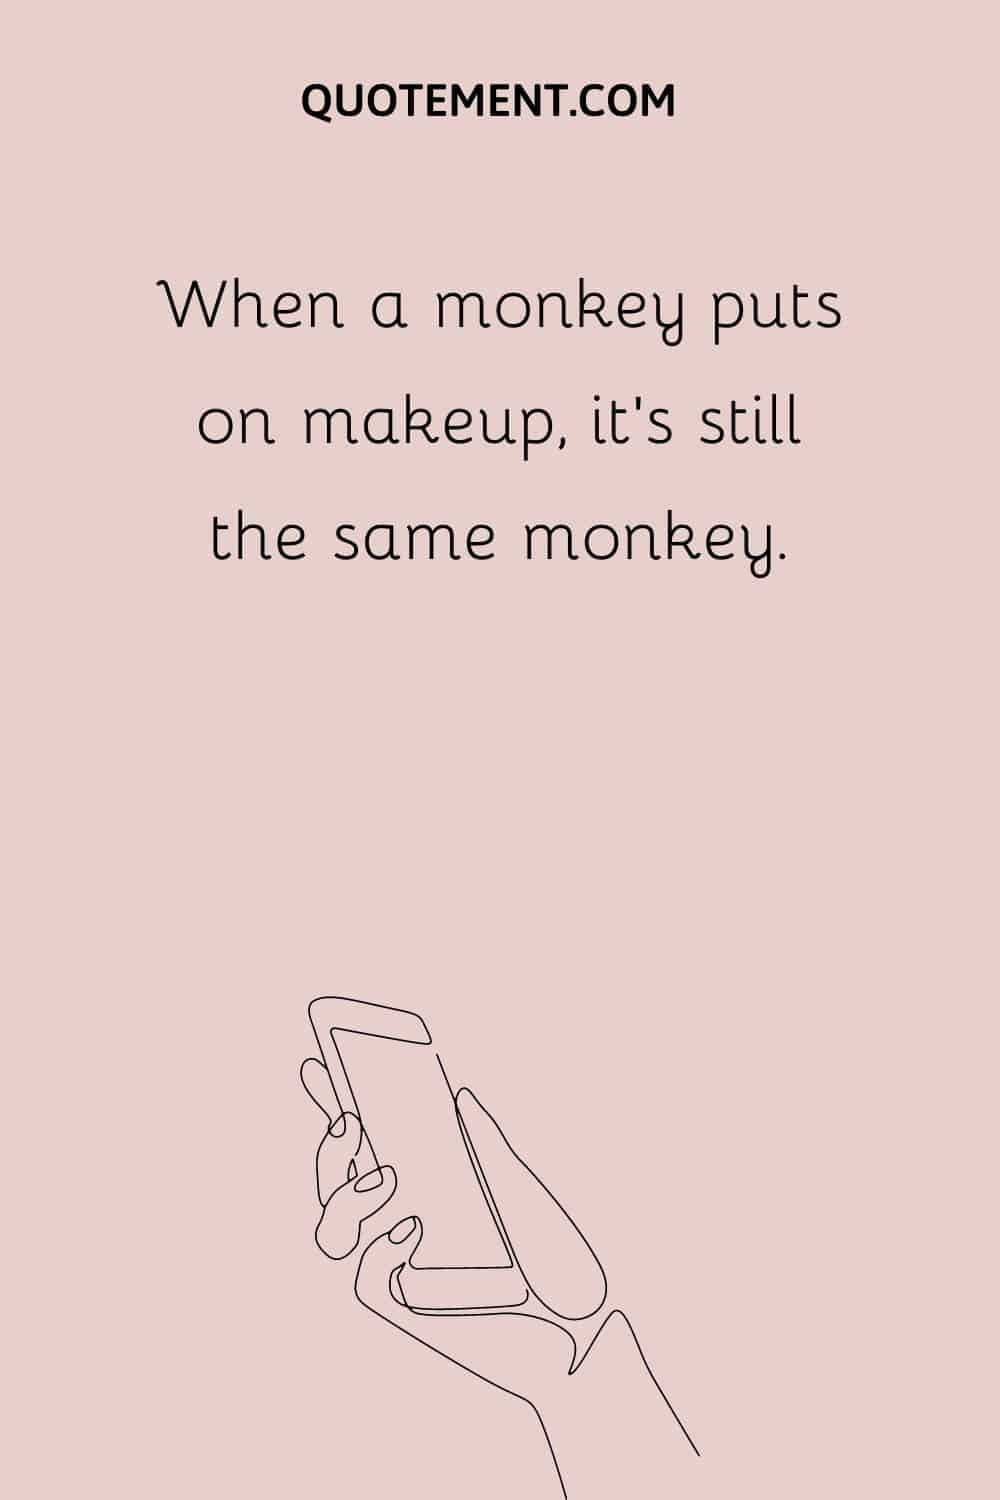 When a monkey puts on makeup, it’s still the same monkey